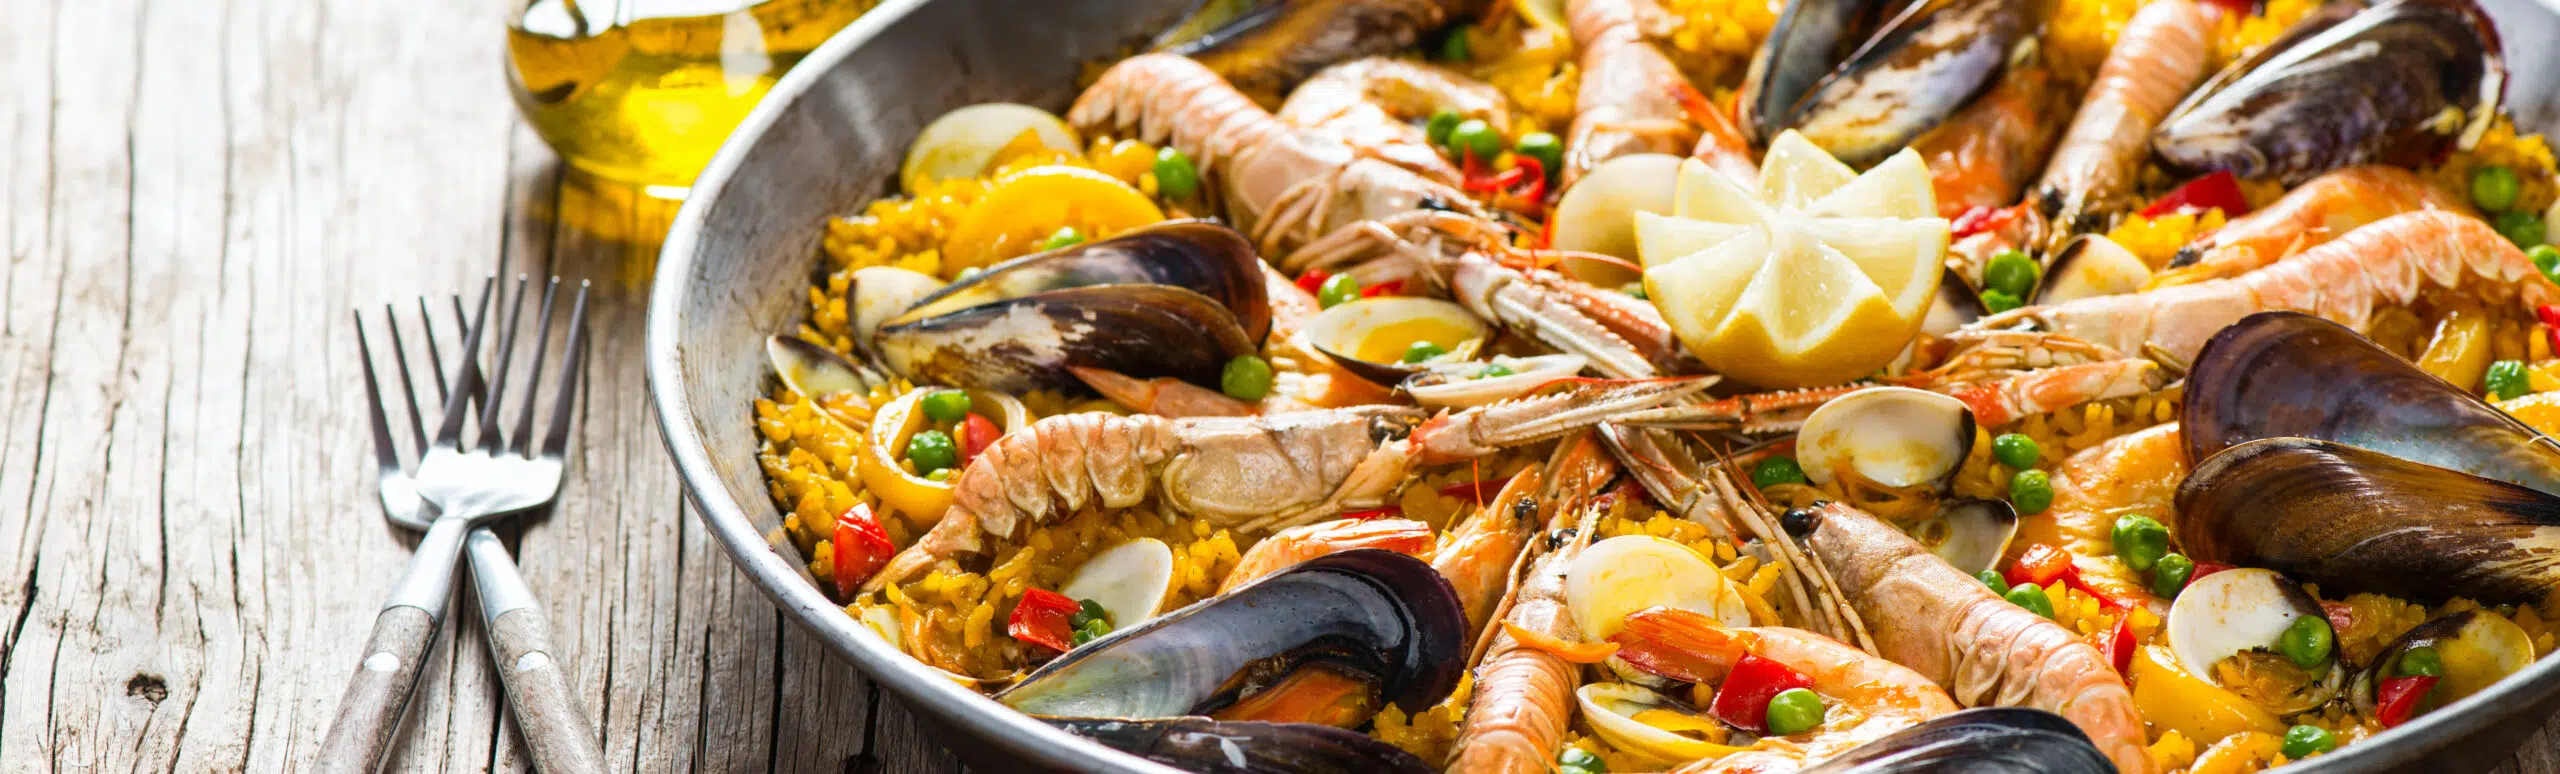 a pan of seafood paella at bodega joan restaurant in barcelona spain